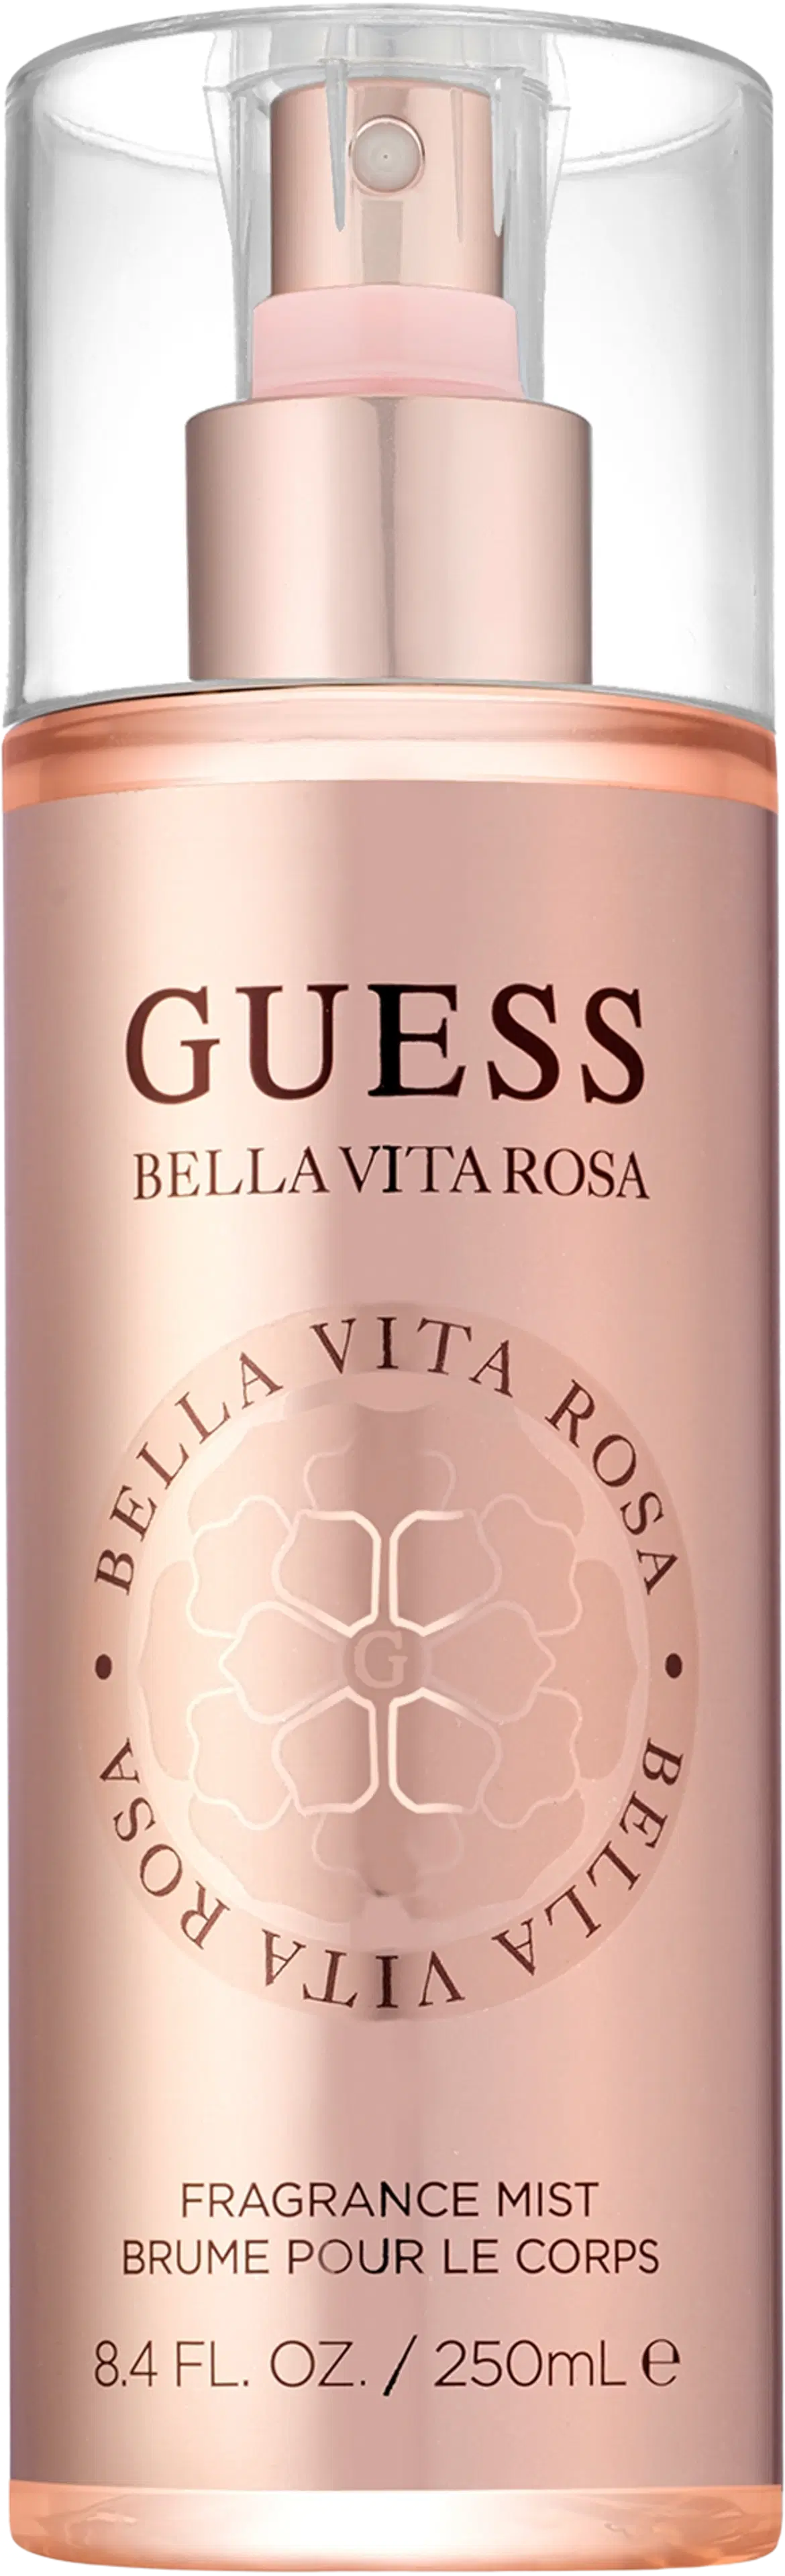 Guess Bella Vita Rosa Fragrance Mist 250ml